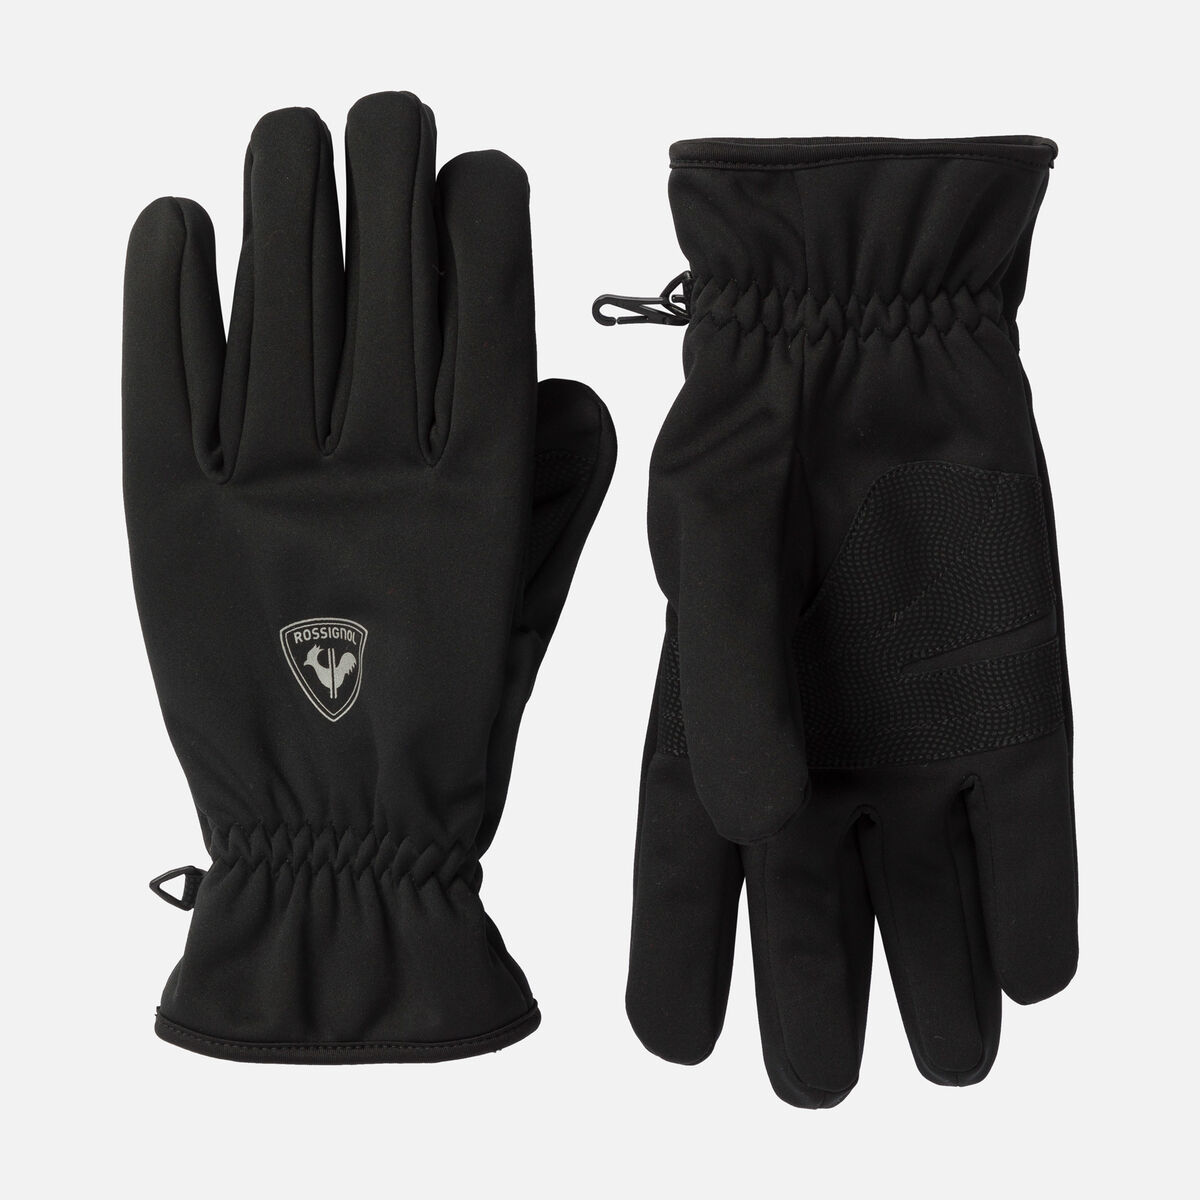 Rossignol Men's XC SOFTSHELL Gloves Black